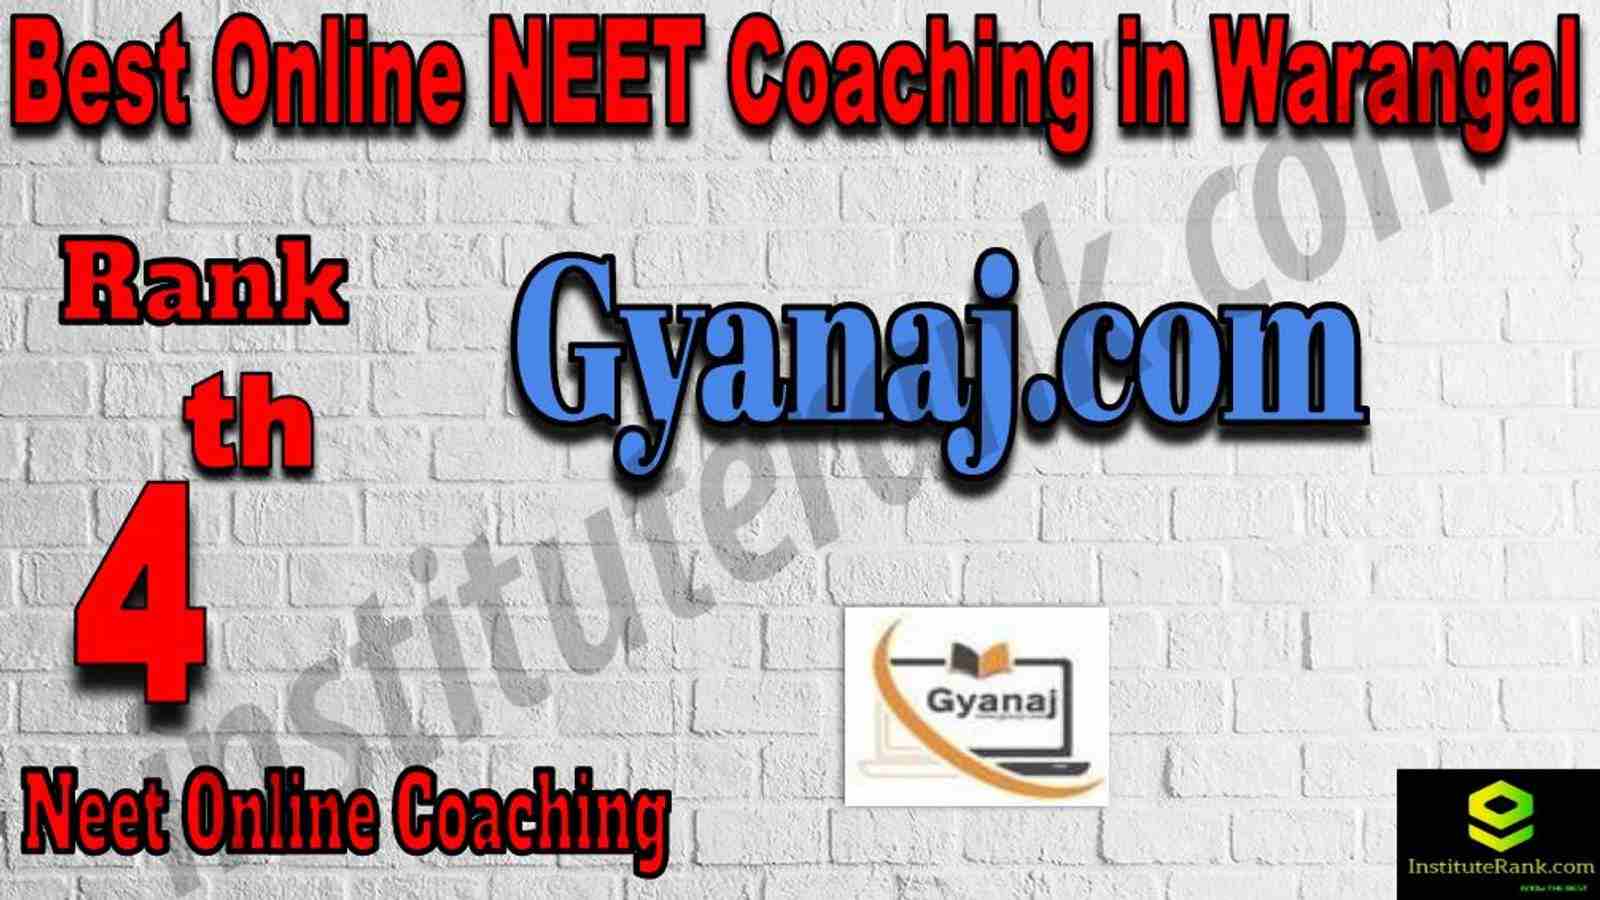 4th Best Online Neet Coaching in Warangal